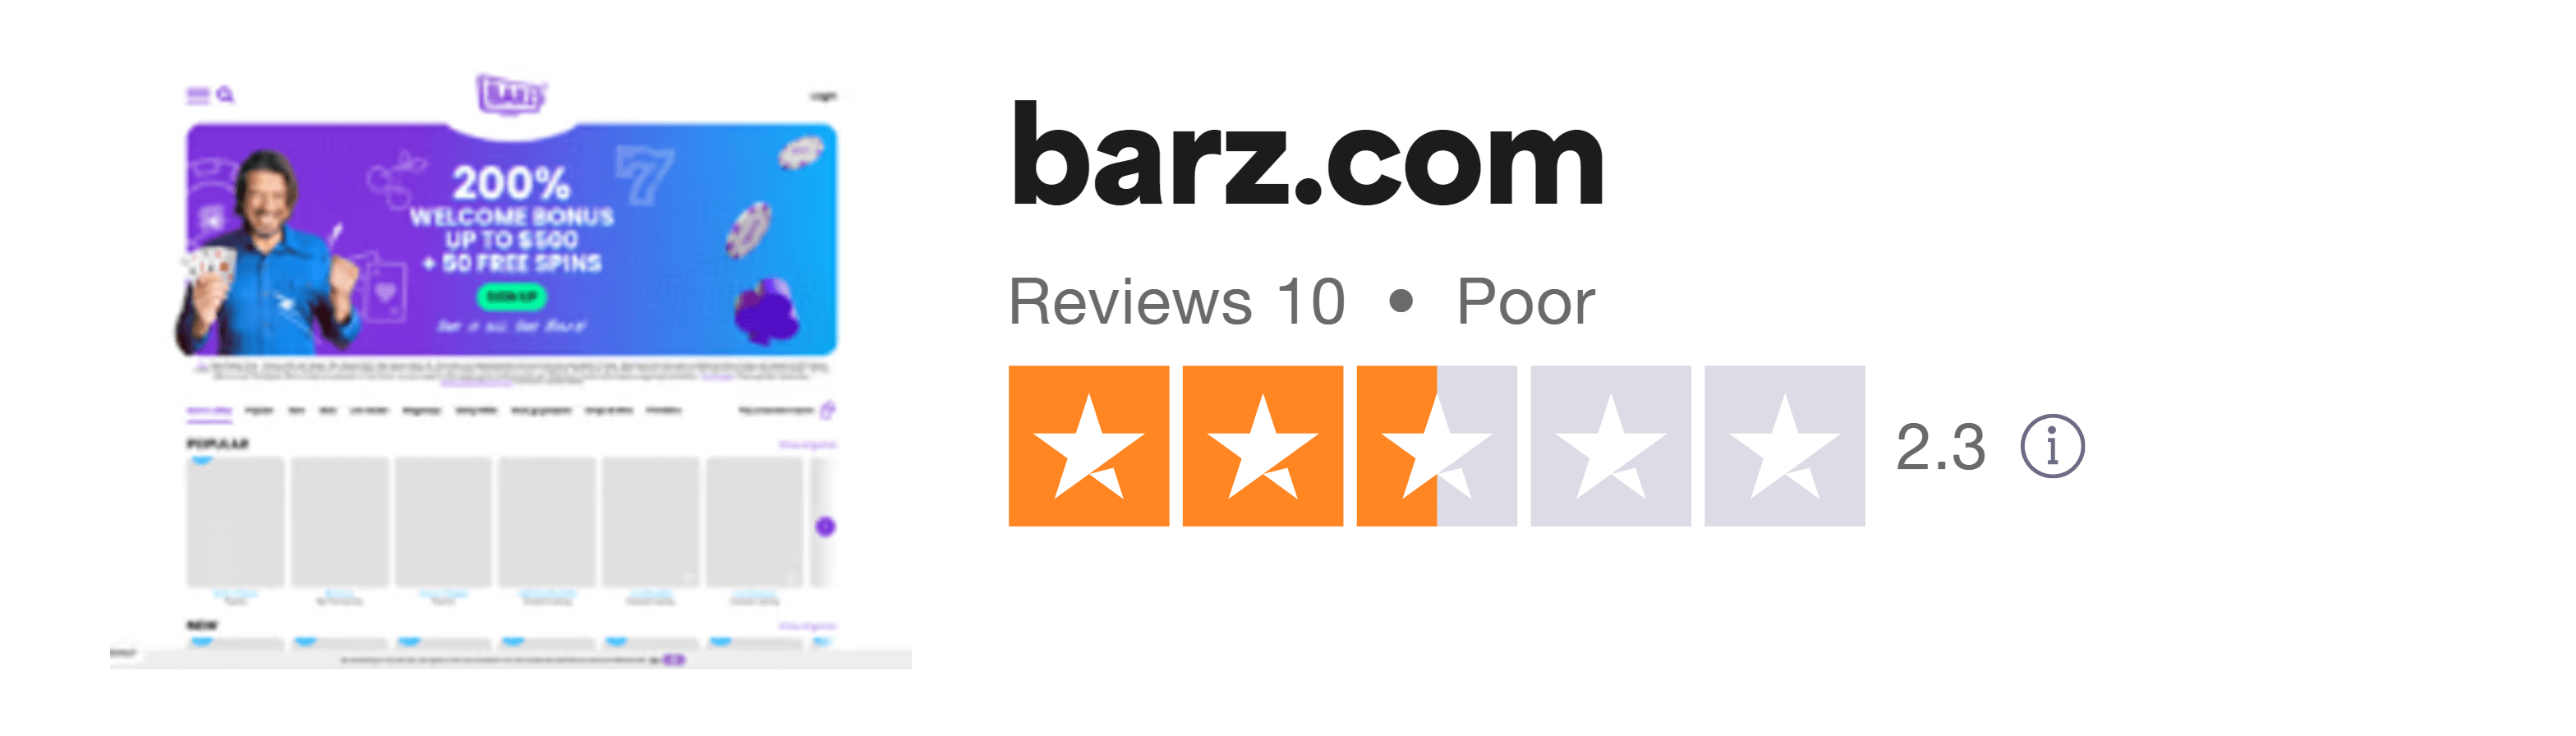 Trustpilot rating screenshot for the Barz